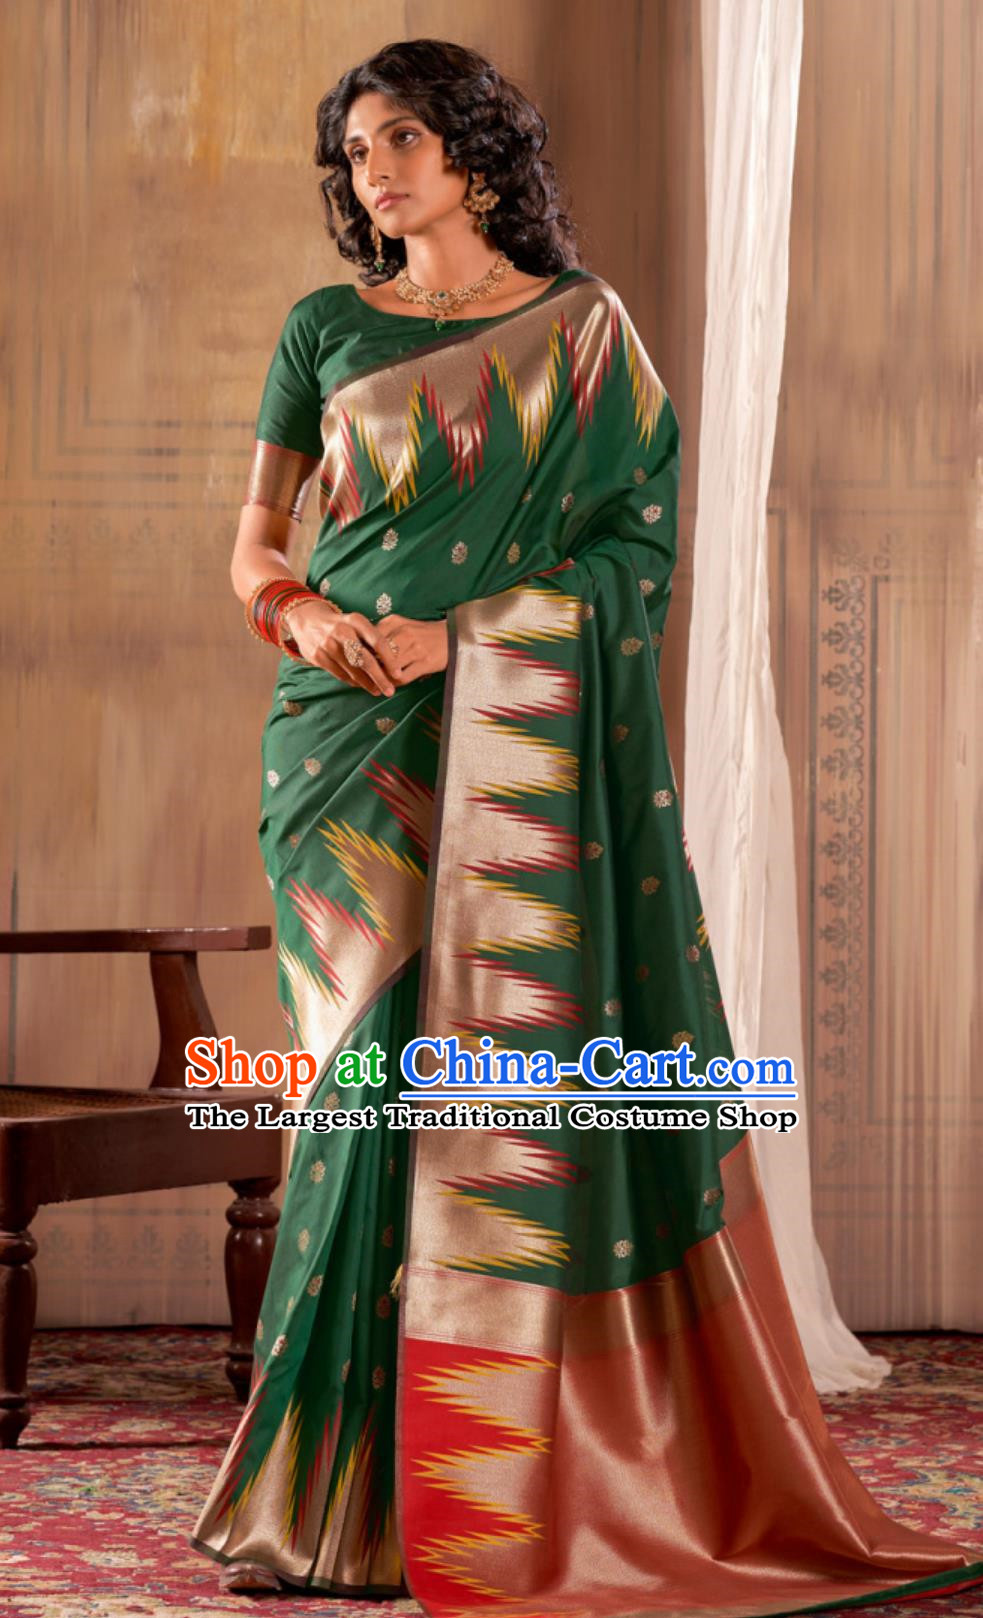 Indian Traditional Court Women Deep Green Sari Dress National Clothing India Festival Fashion